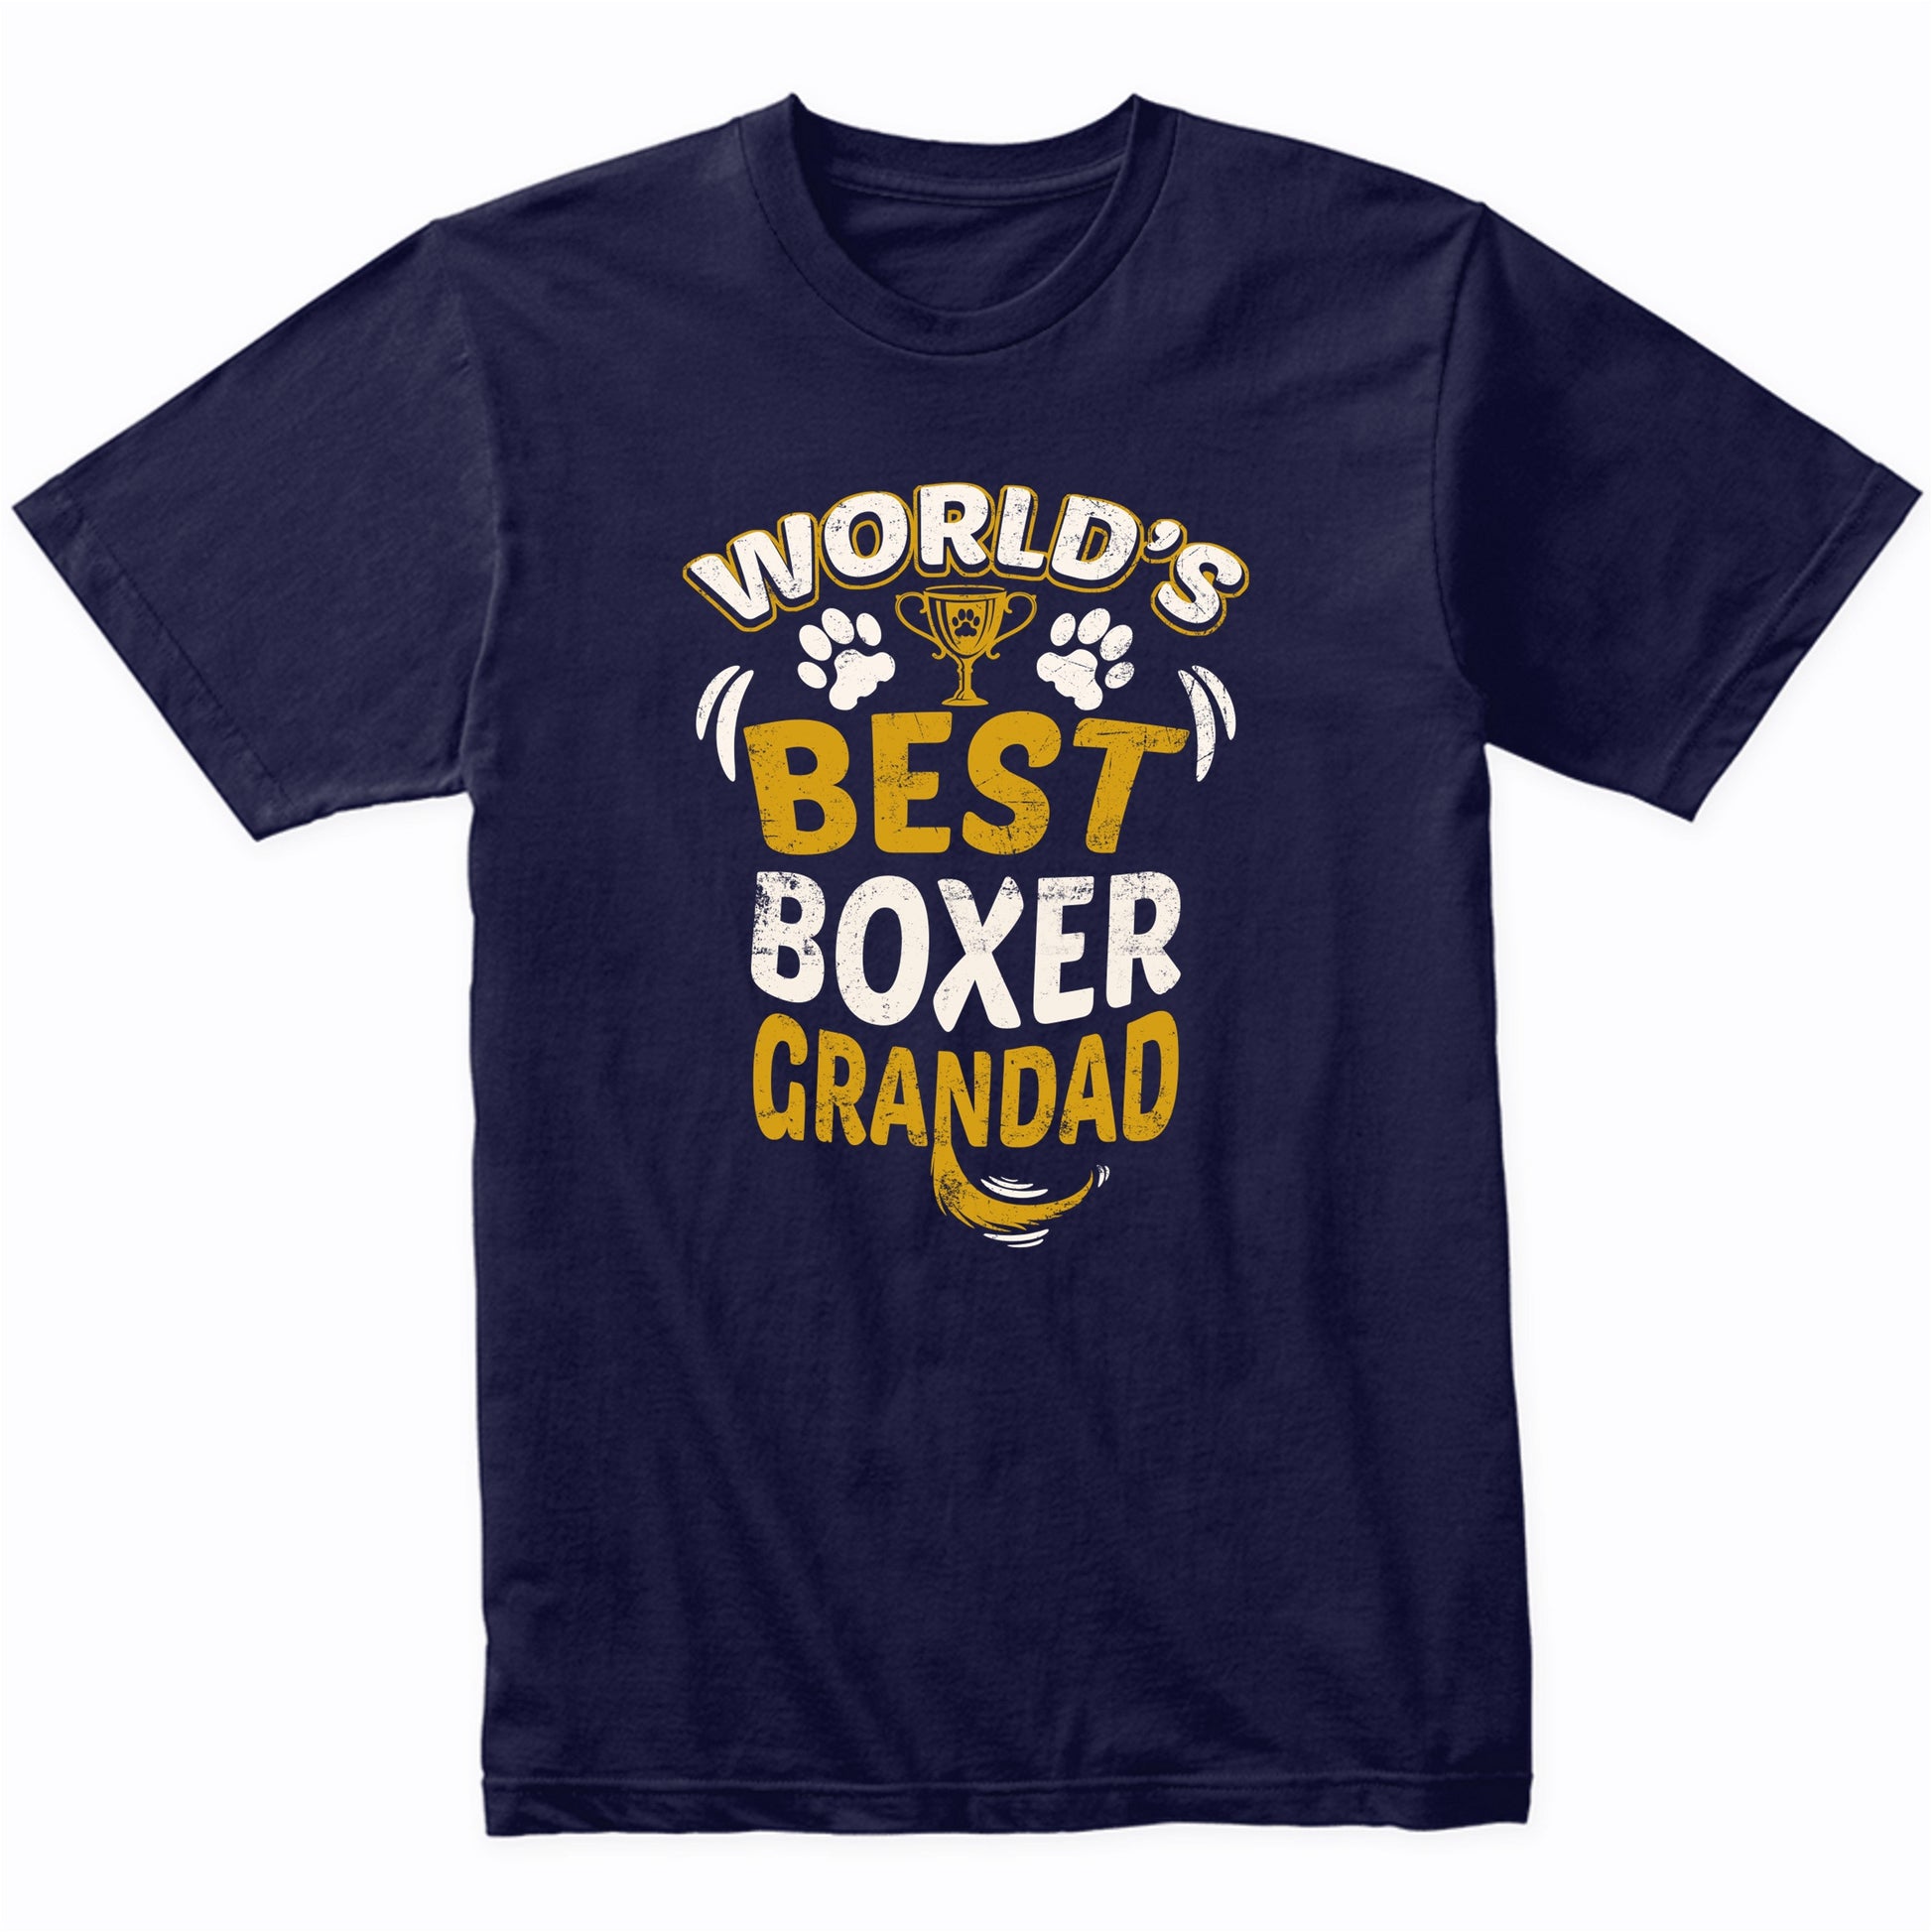 World's Best Boxer Grandad Graphic T-Shirt